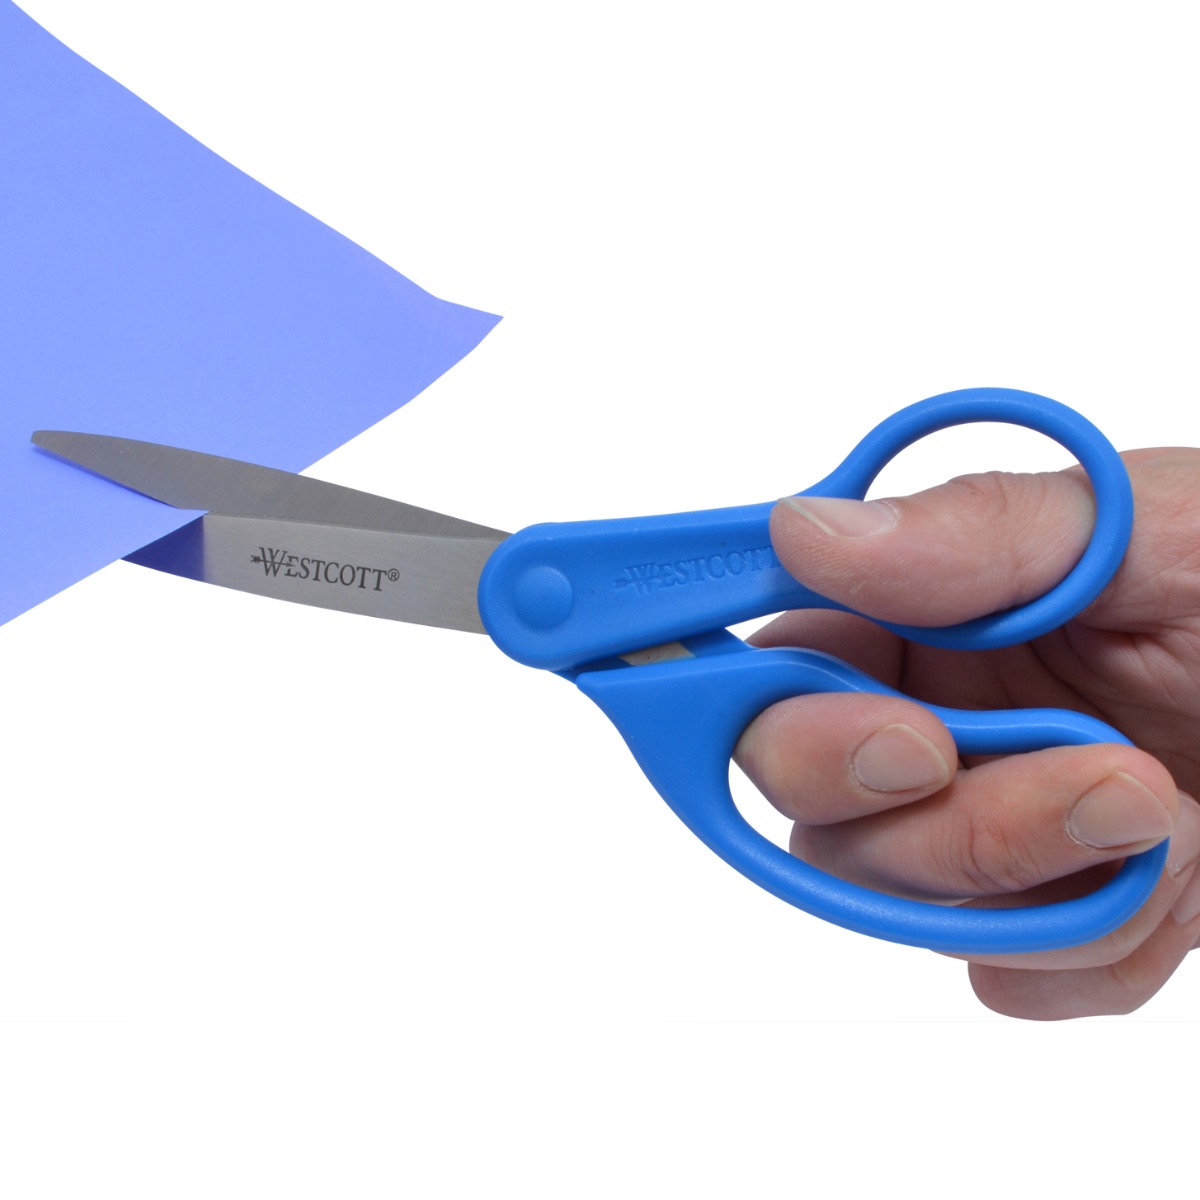 Westcott 7" All Purpose Preferred Stainless Steel Scissors, Blue (44217)